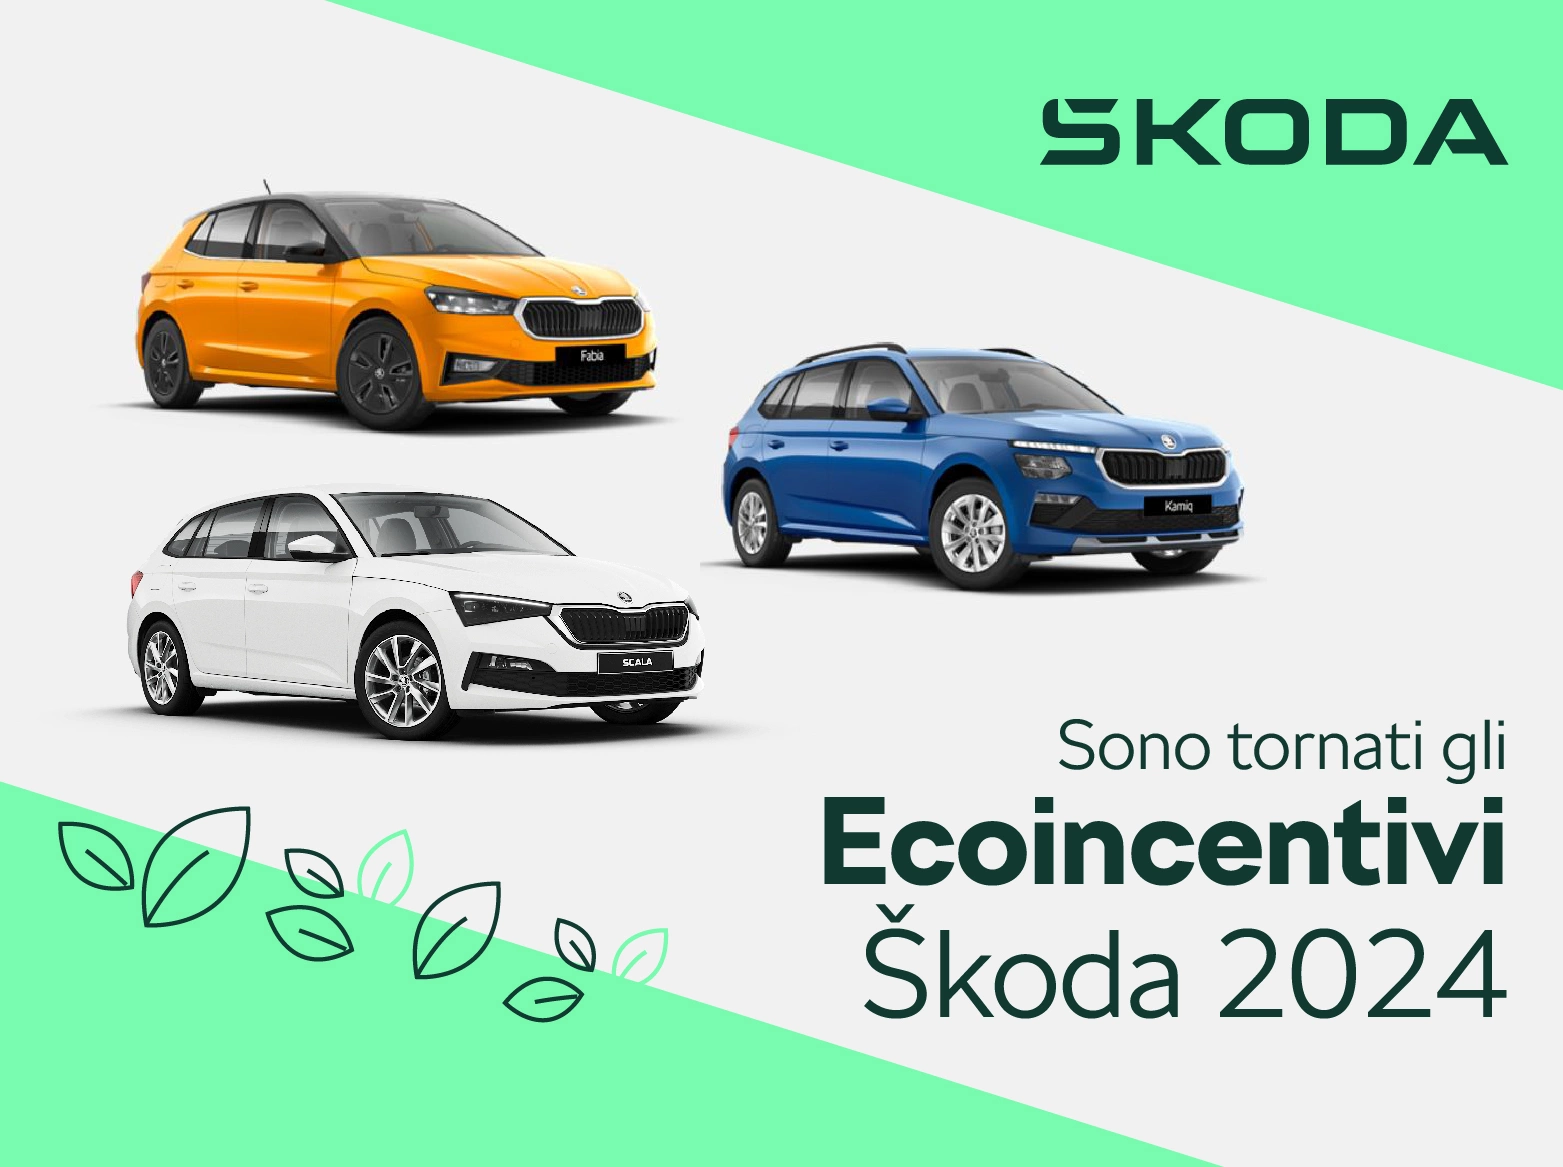 Sono tornati gli ecoincentivi Škoda!